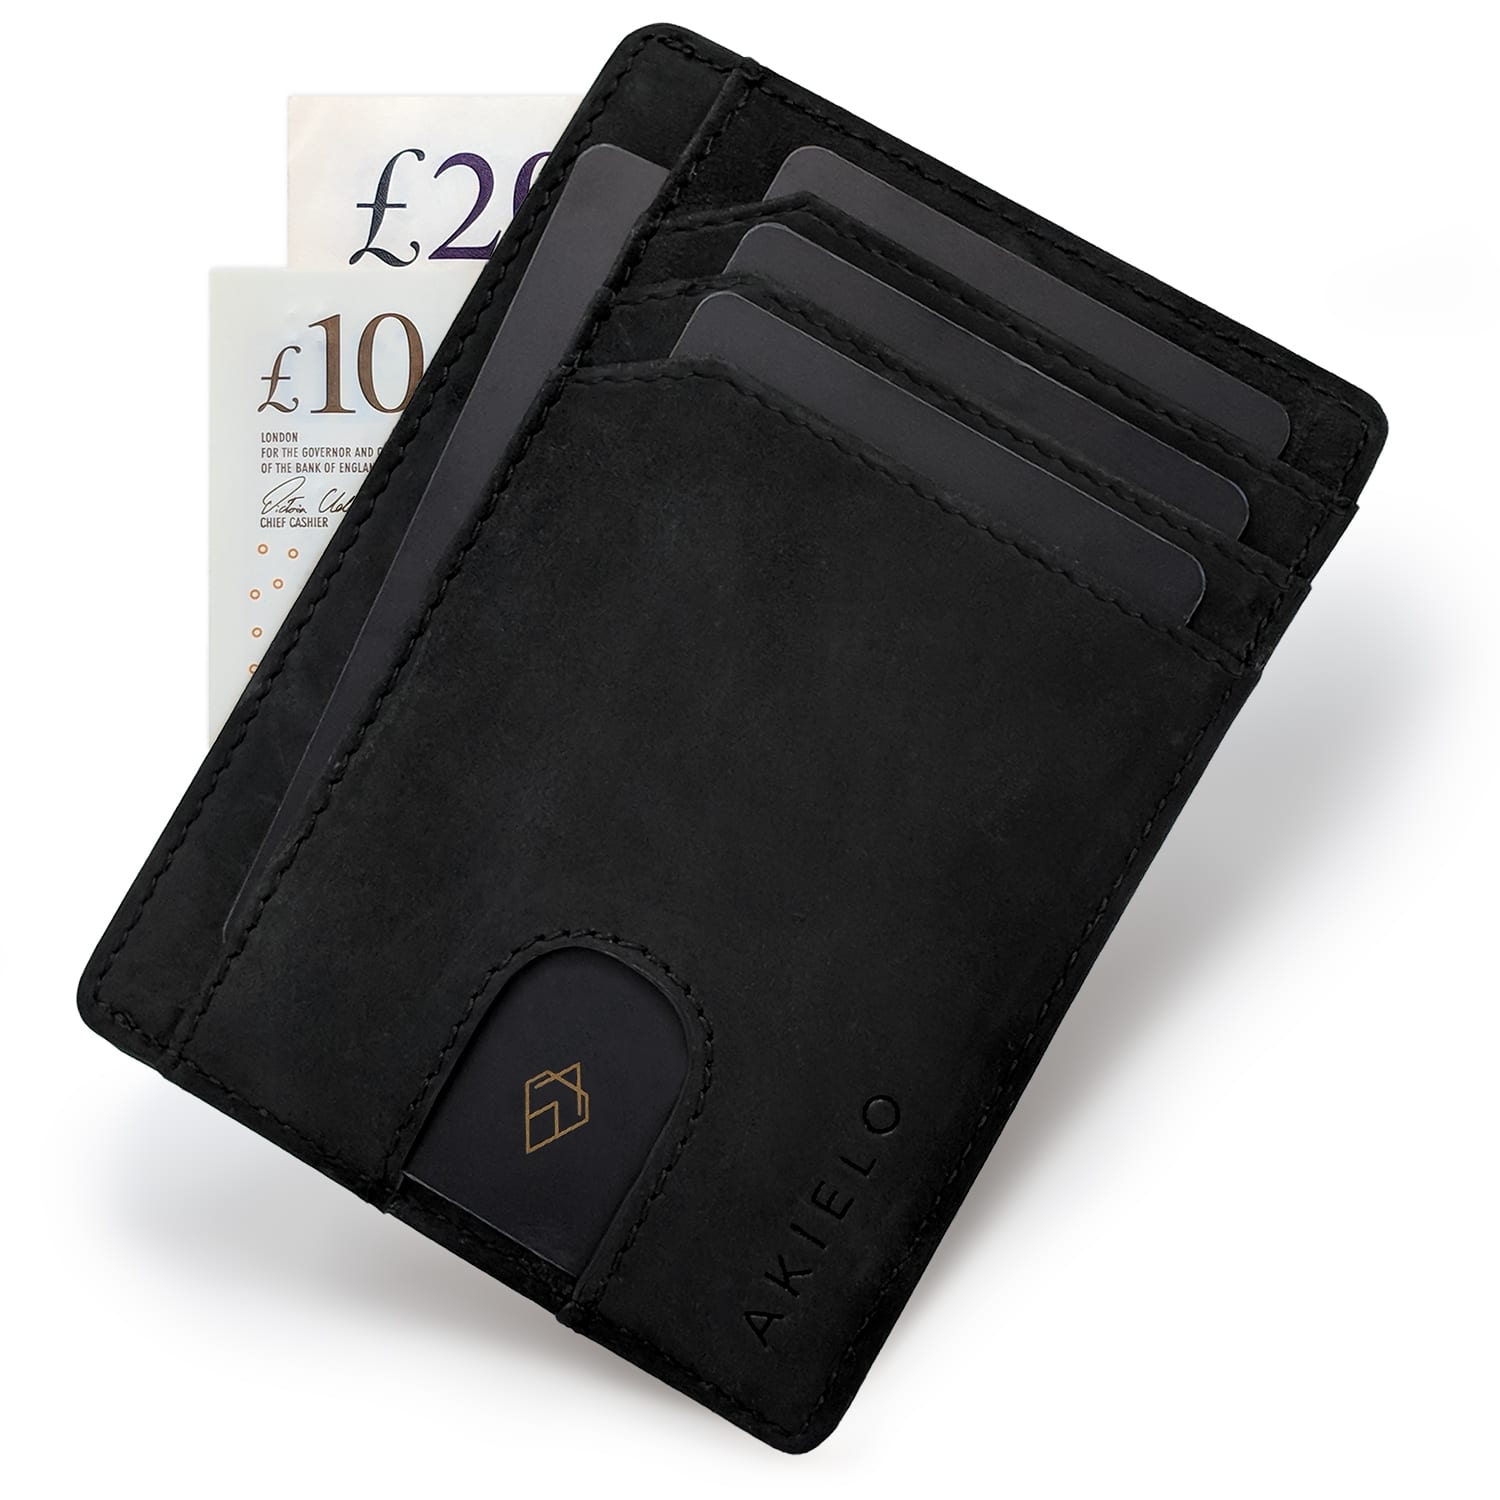 Black RFID blocking credit card holder wallet minimalist card wallet